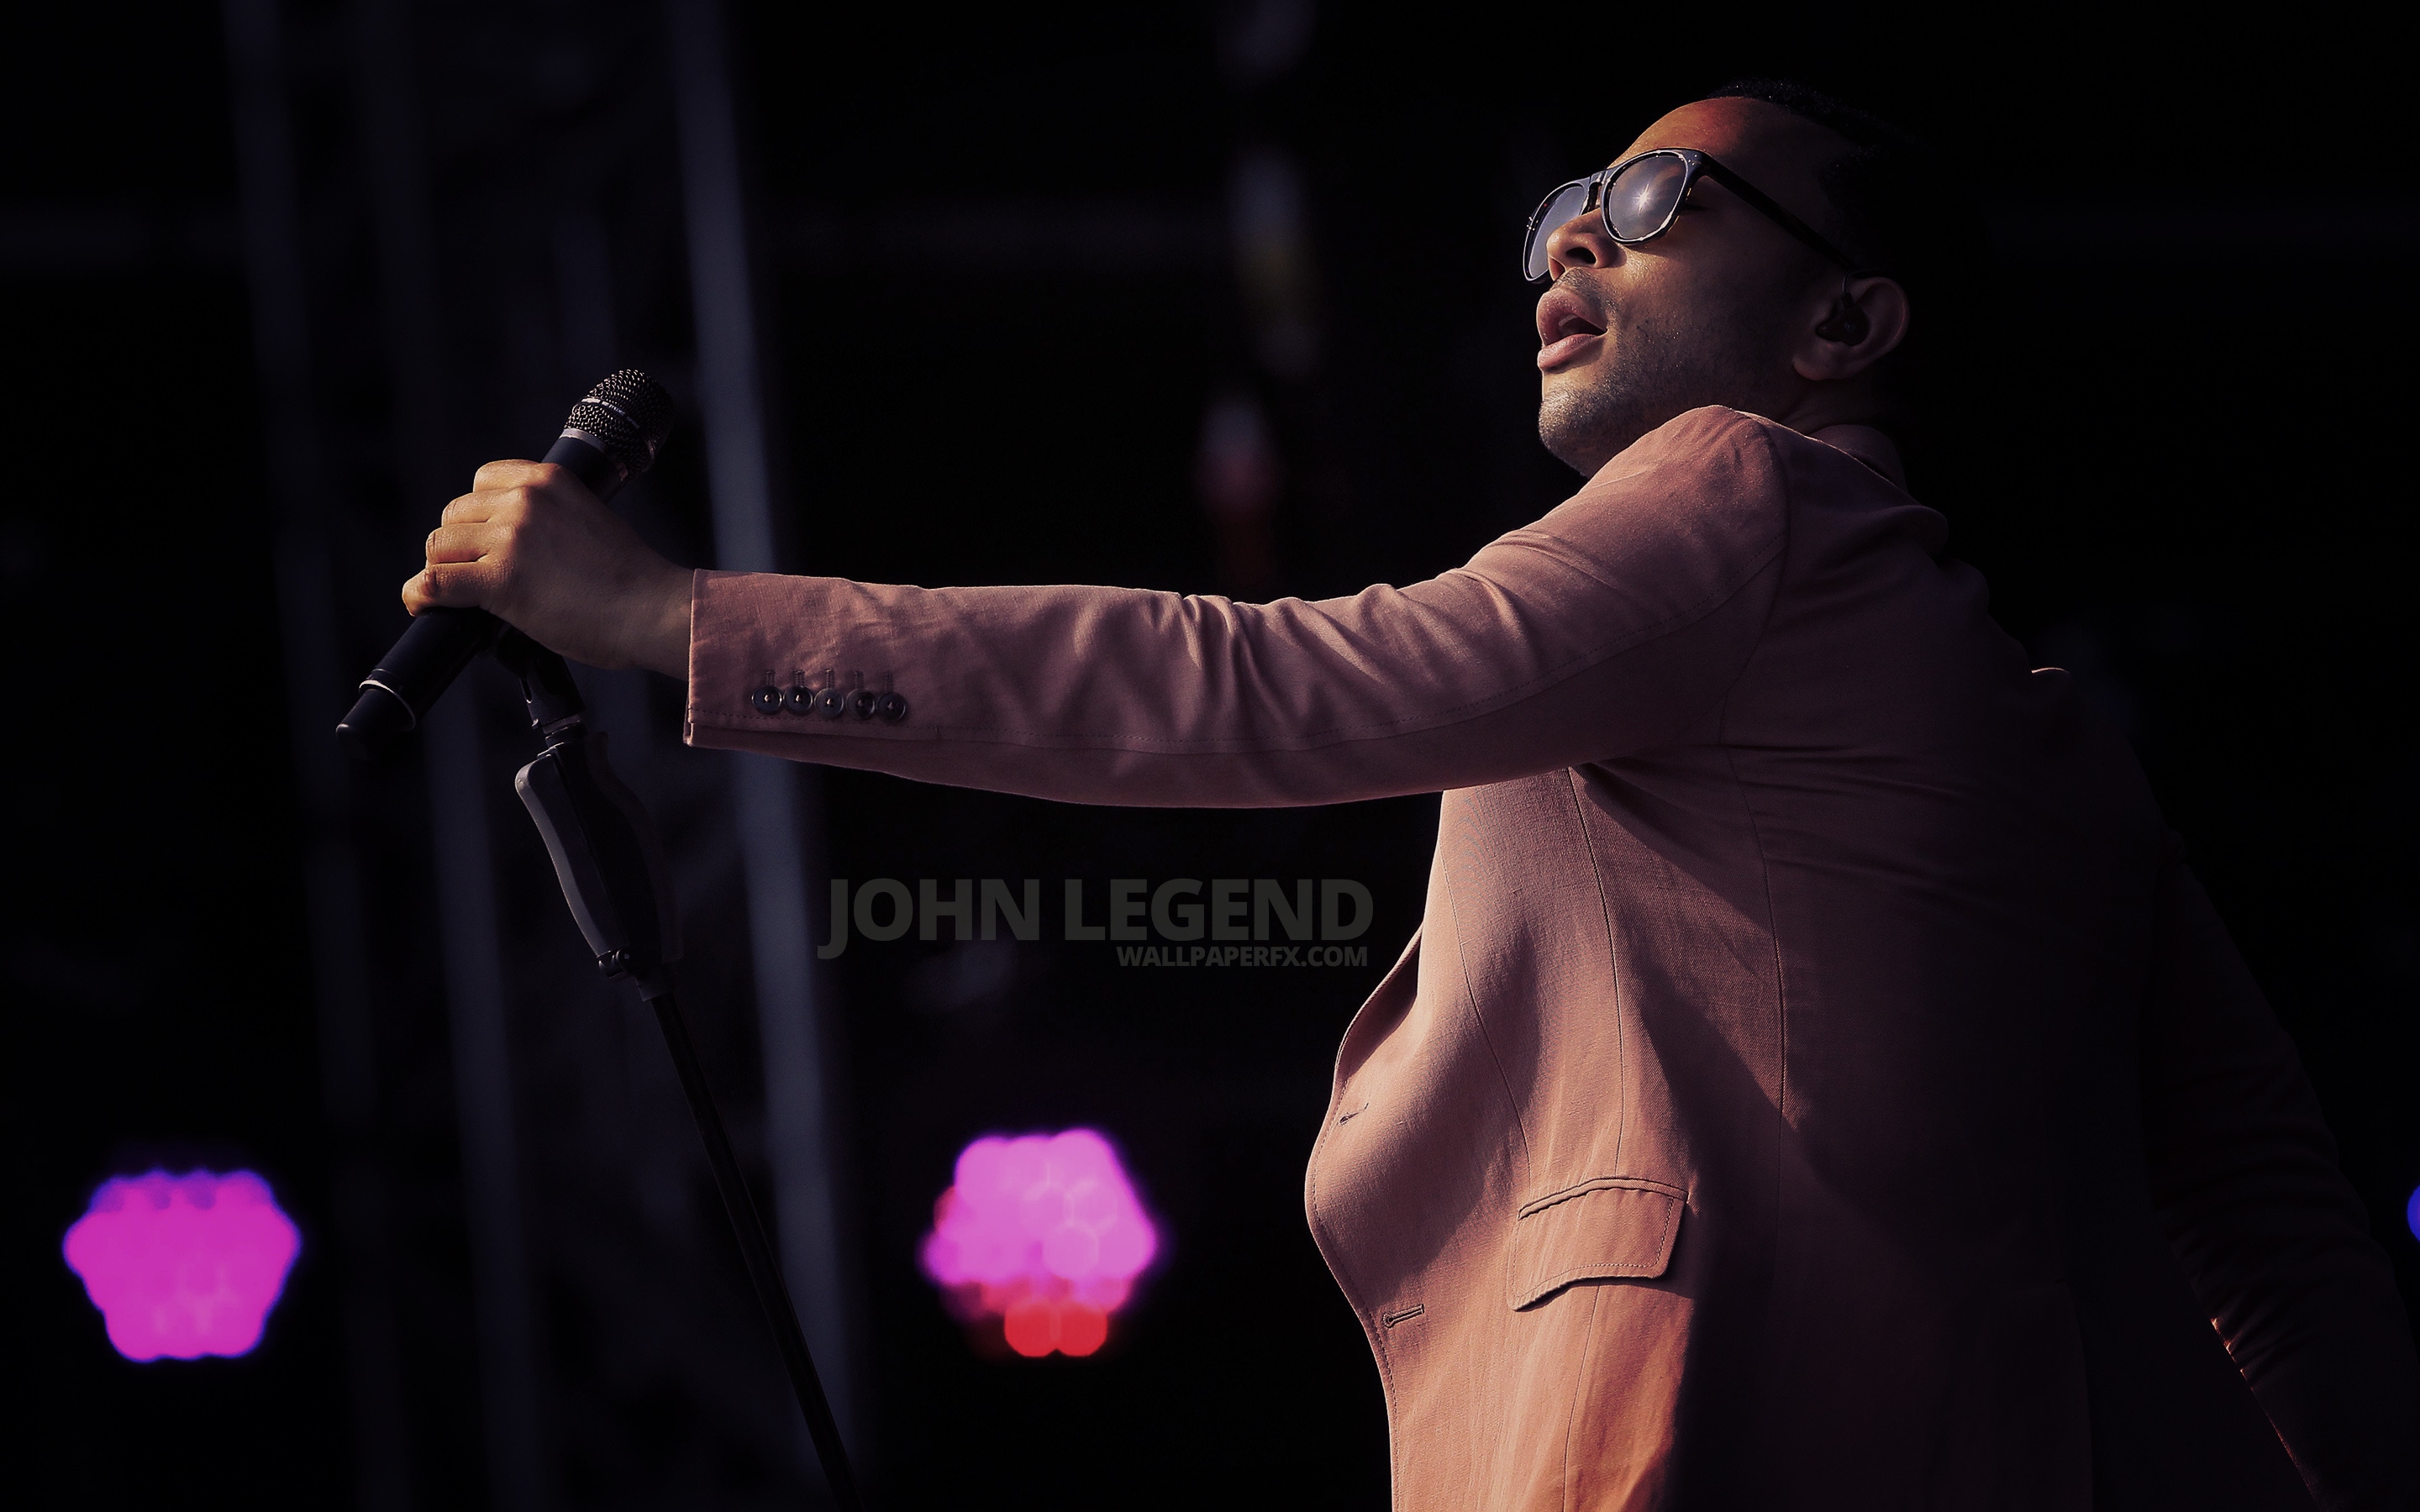 John Legend on Stage for 2880 x 1800 Retina Display resolution